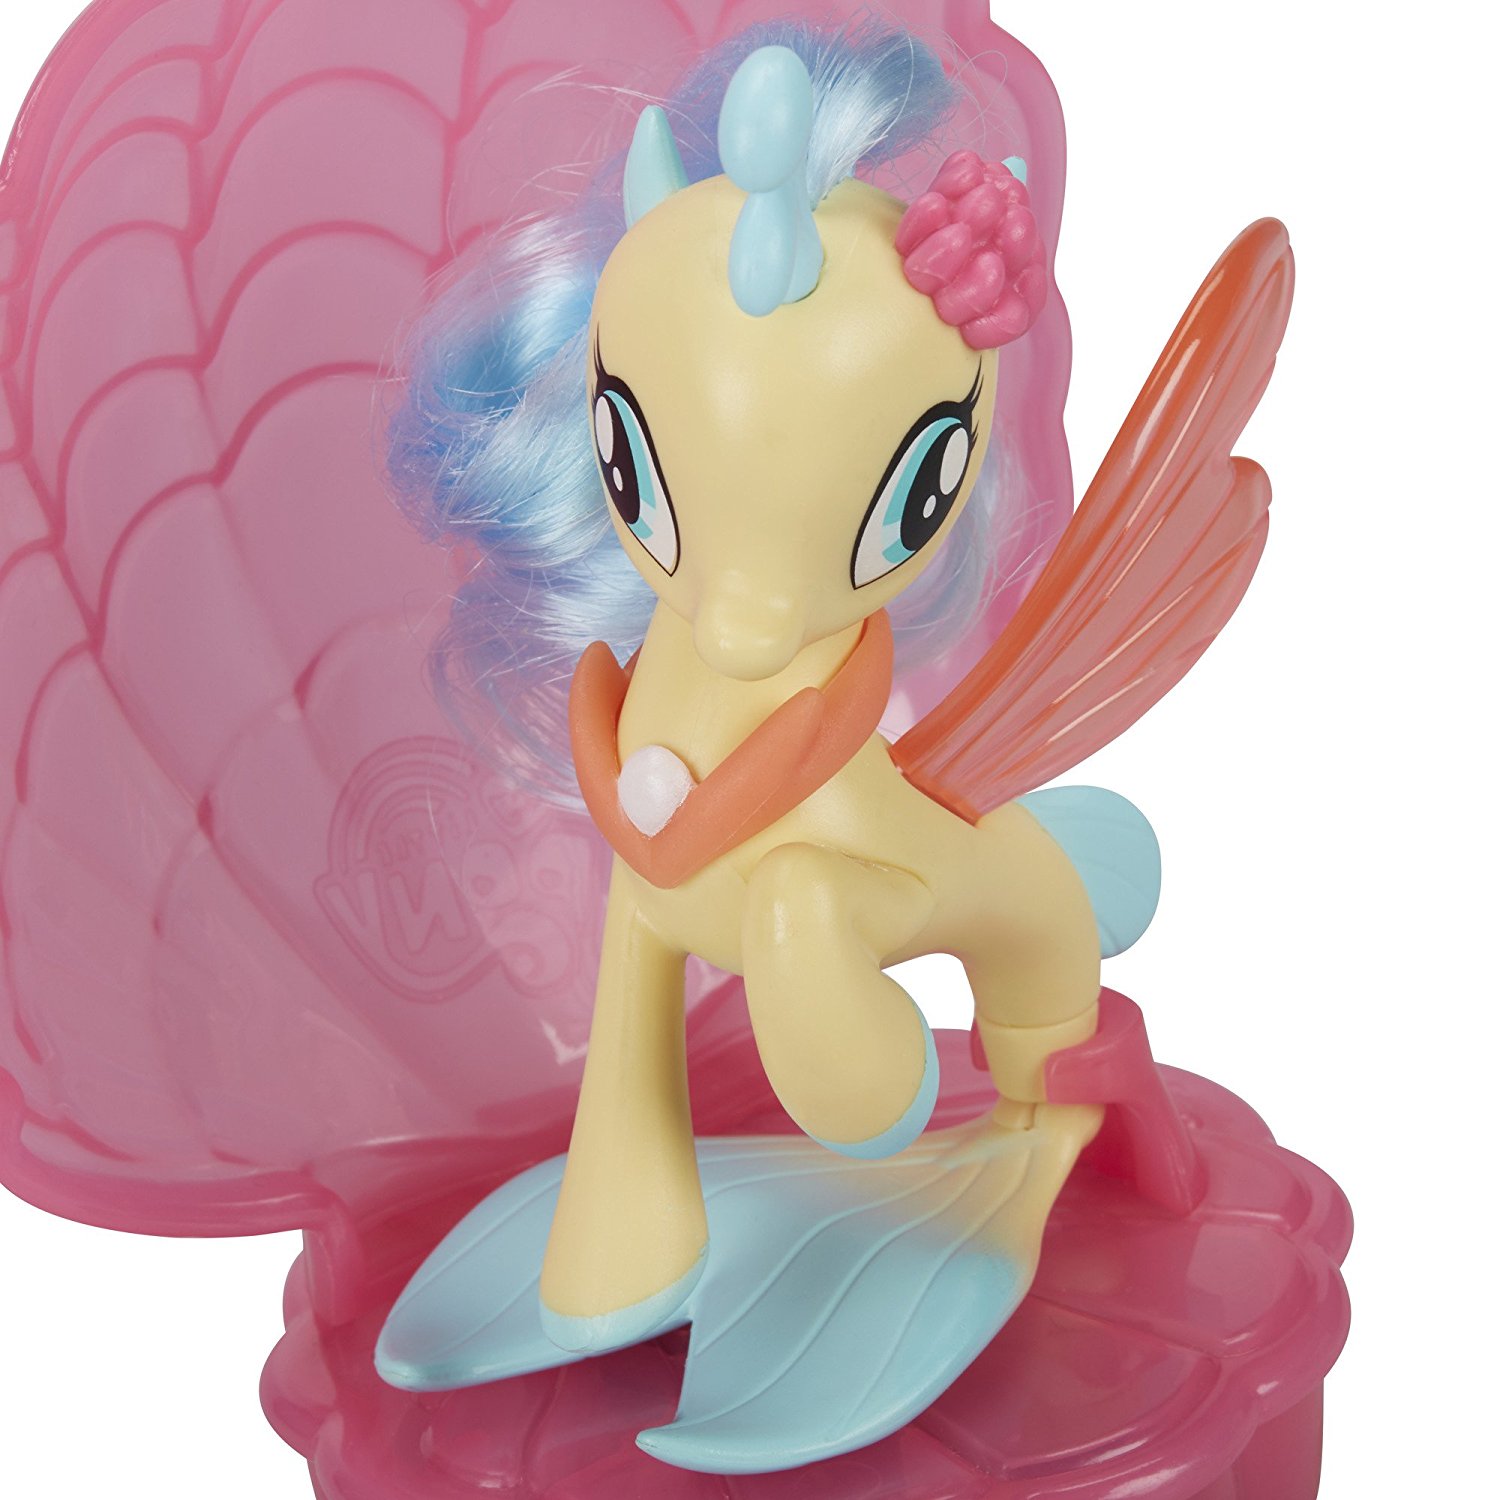 Новые игрушки литл пони. Игровой набор Hasbro принцесса Скайстар c1835. Фигурка Скайстар my little Pony. My little Pony Хасбро. Принцесса Скайстар пони игрушка.